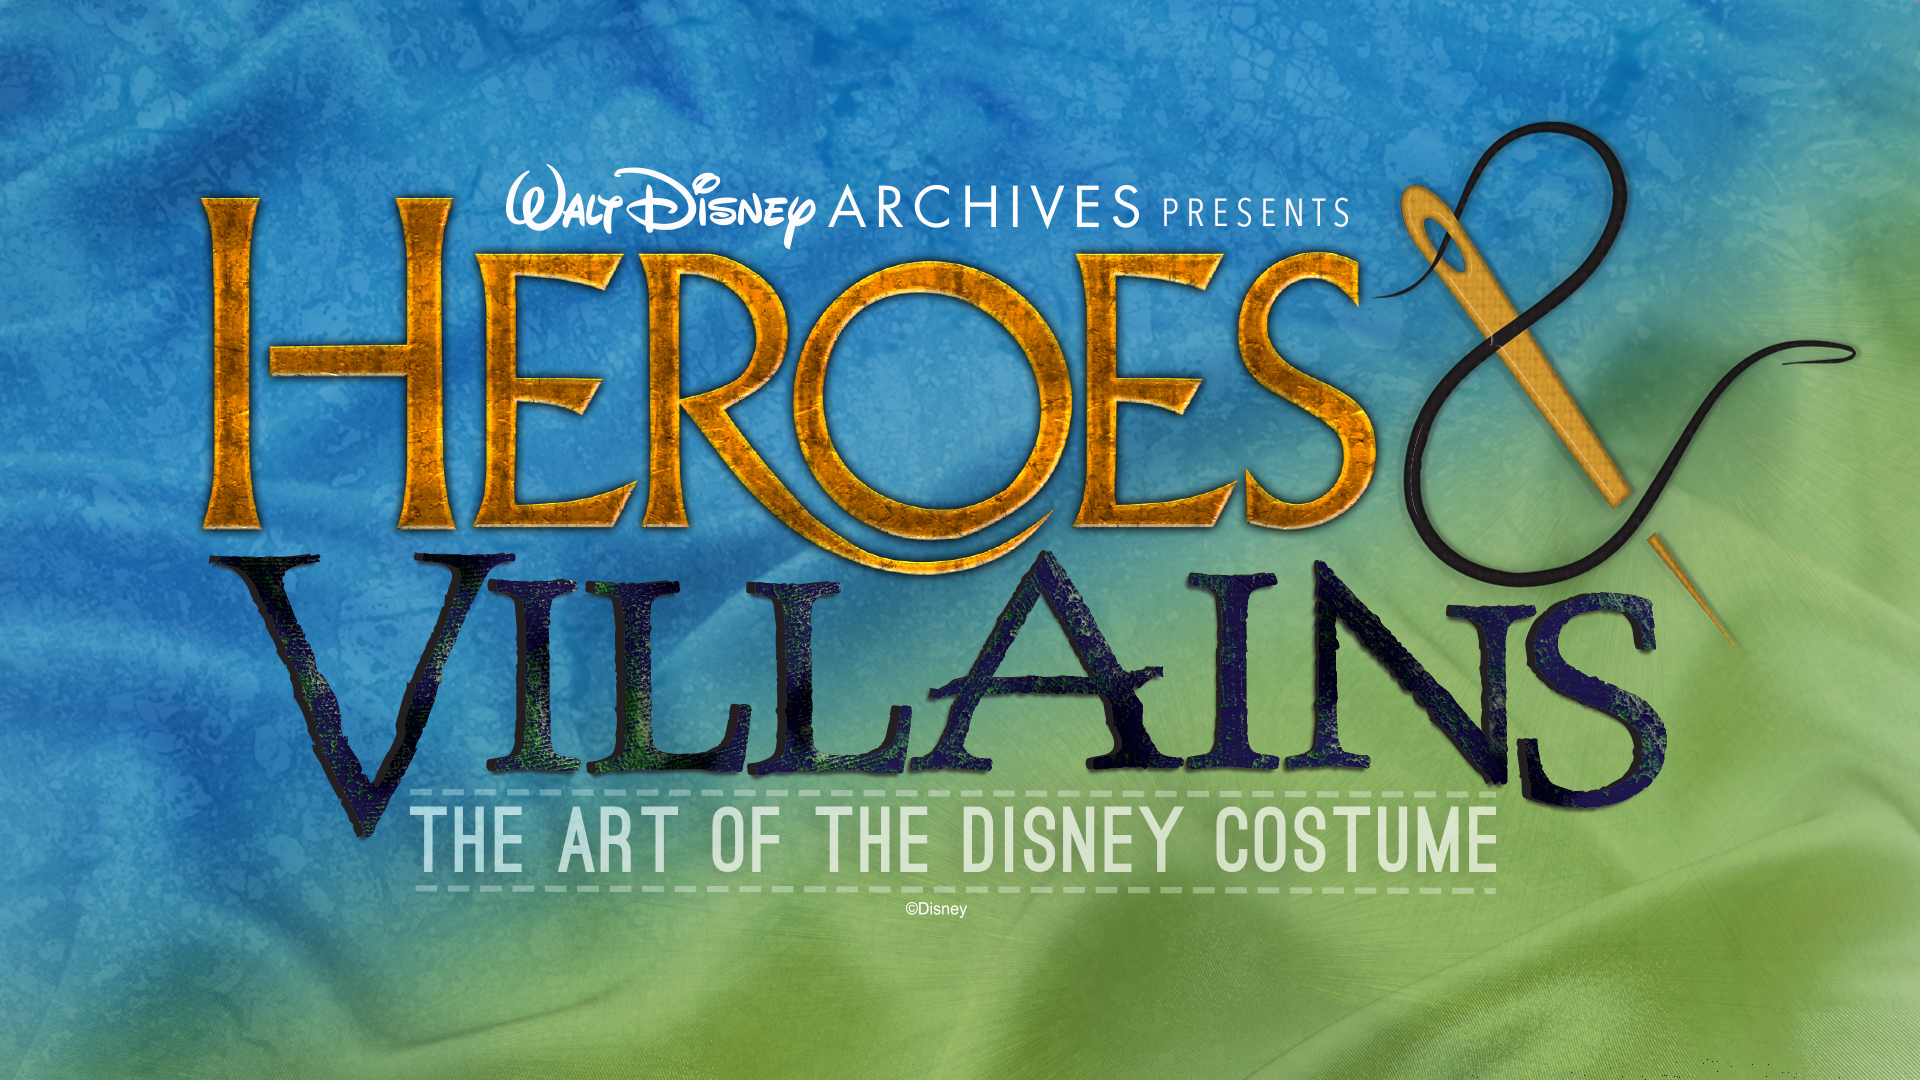 Disney Announces New D23 Expo 'Heroes and Villains' Exhibit Rotoscopers